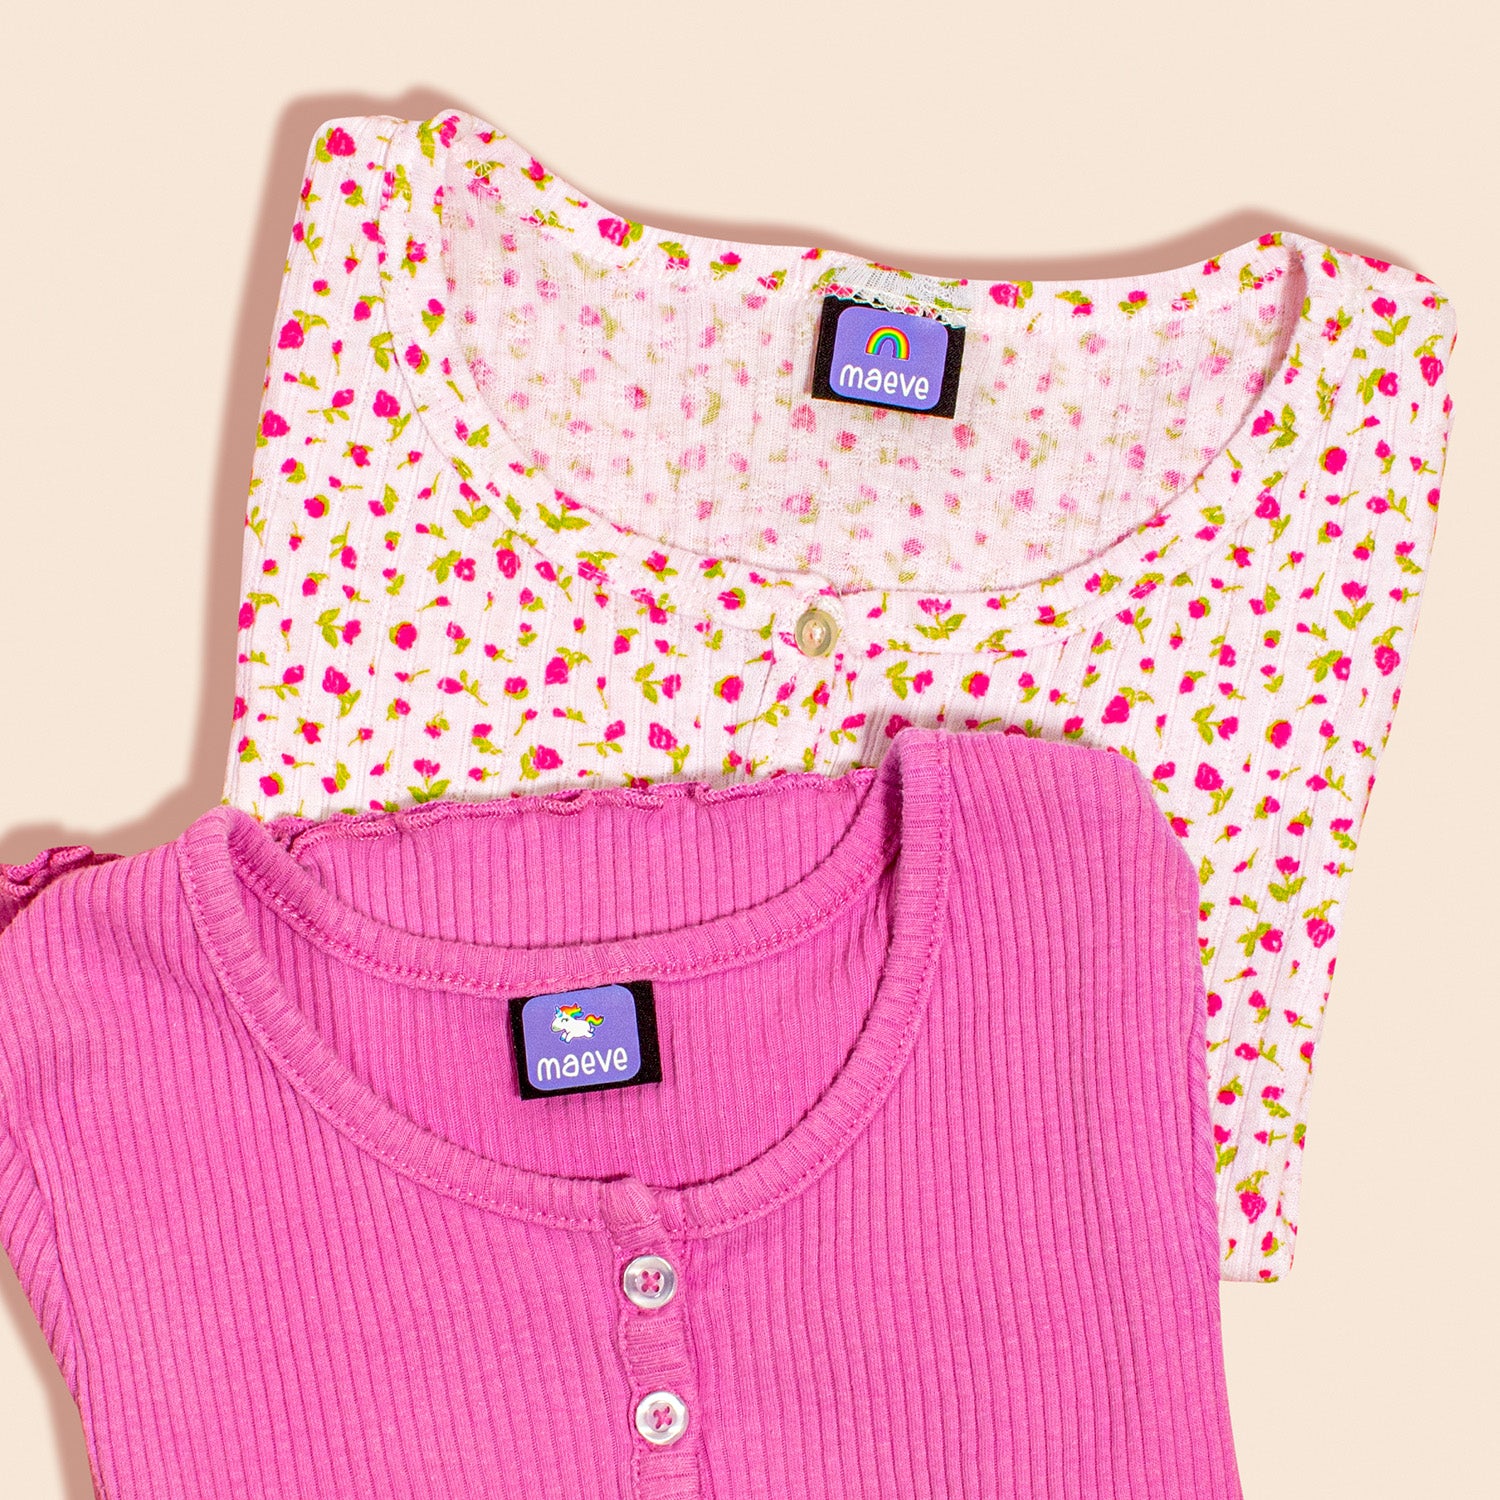 Tiny Clothing Labels: Pom Pom Kids' Clothing Labels